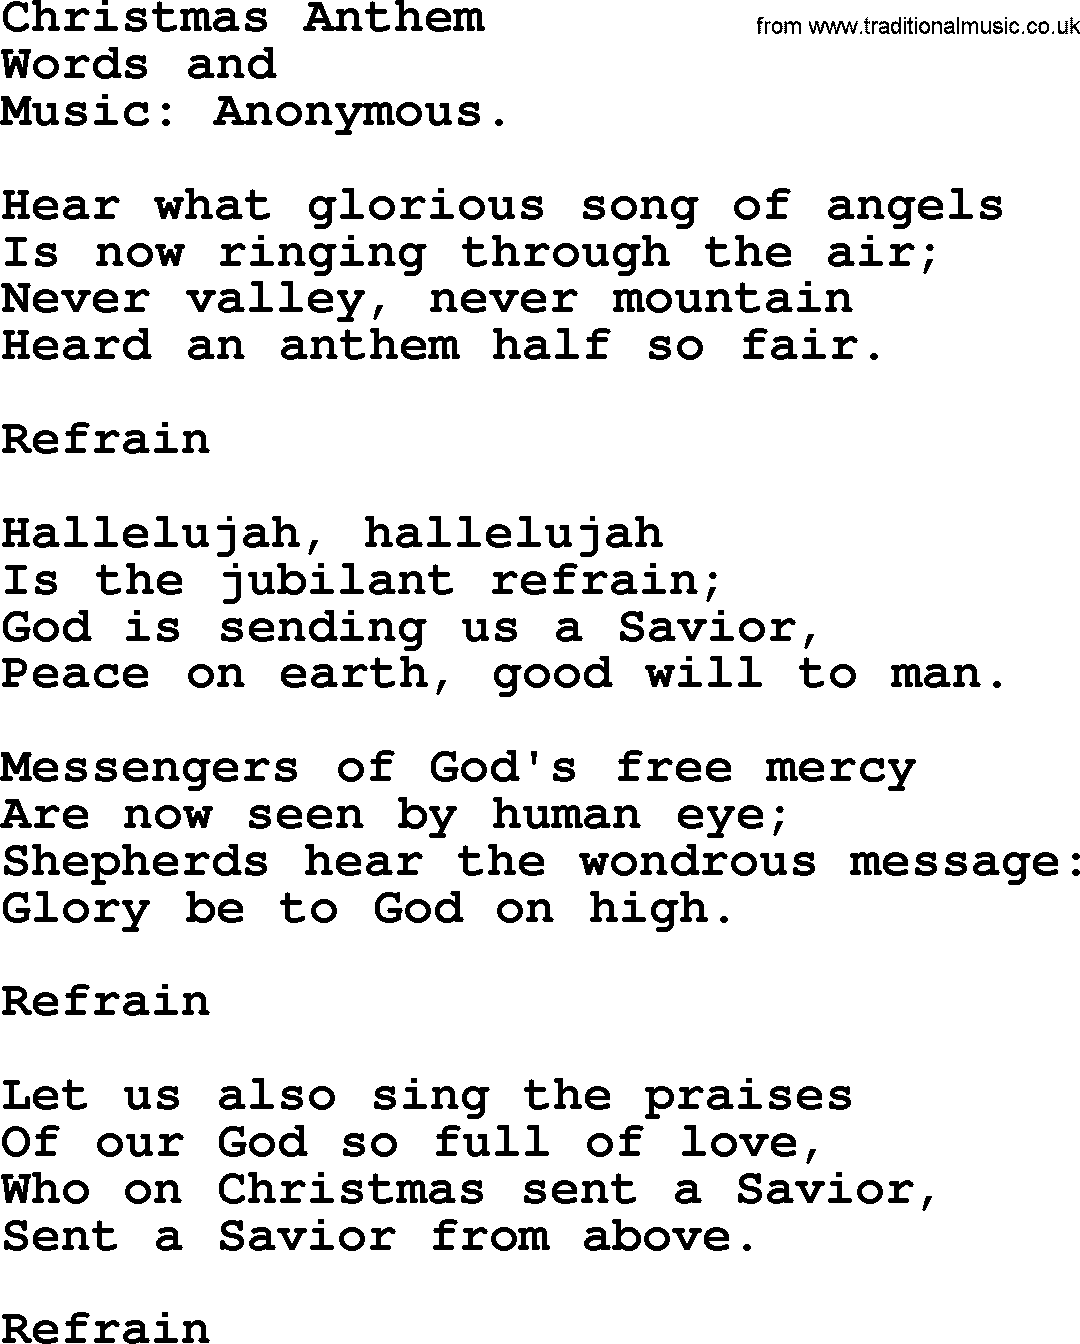 Christmas Hymns, Carols and Songs, title: Christmas Anthem, lyrics with PDF